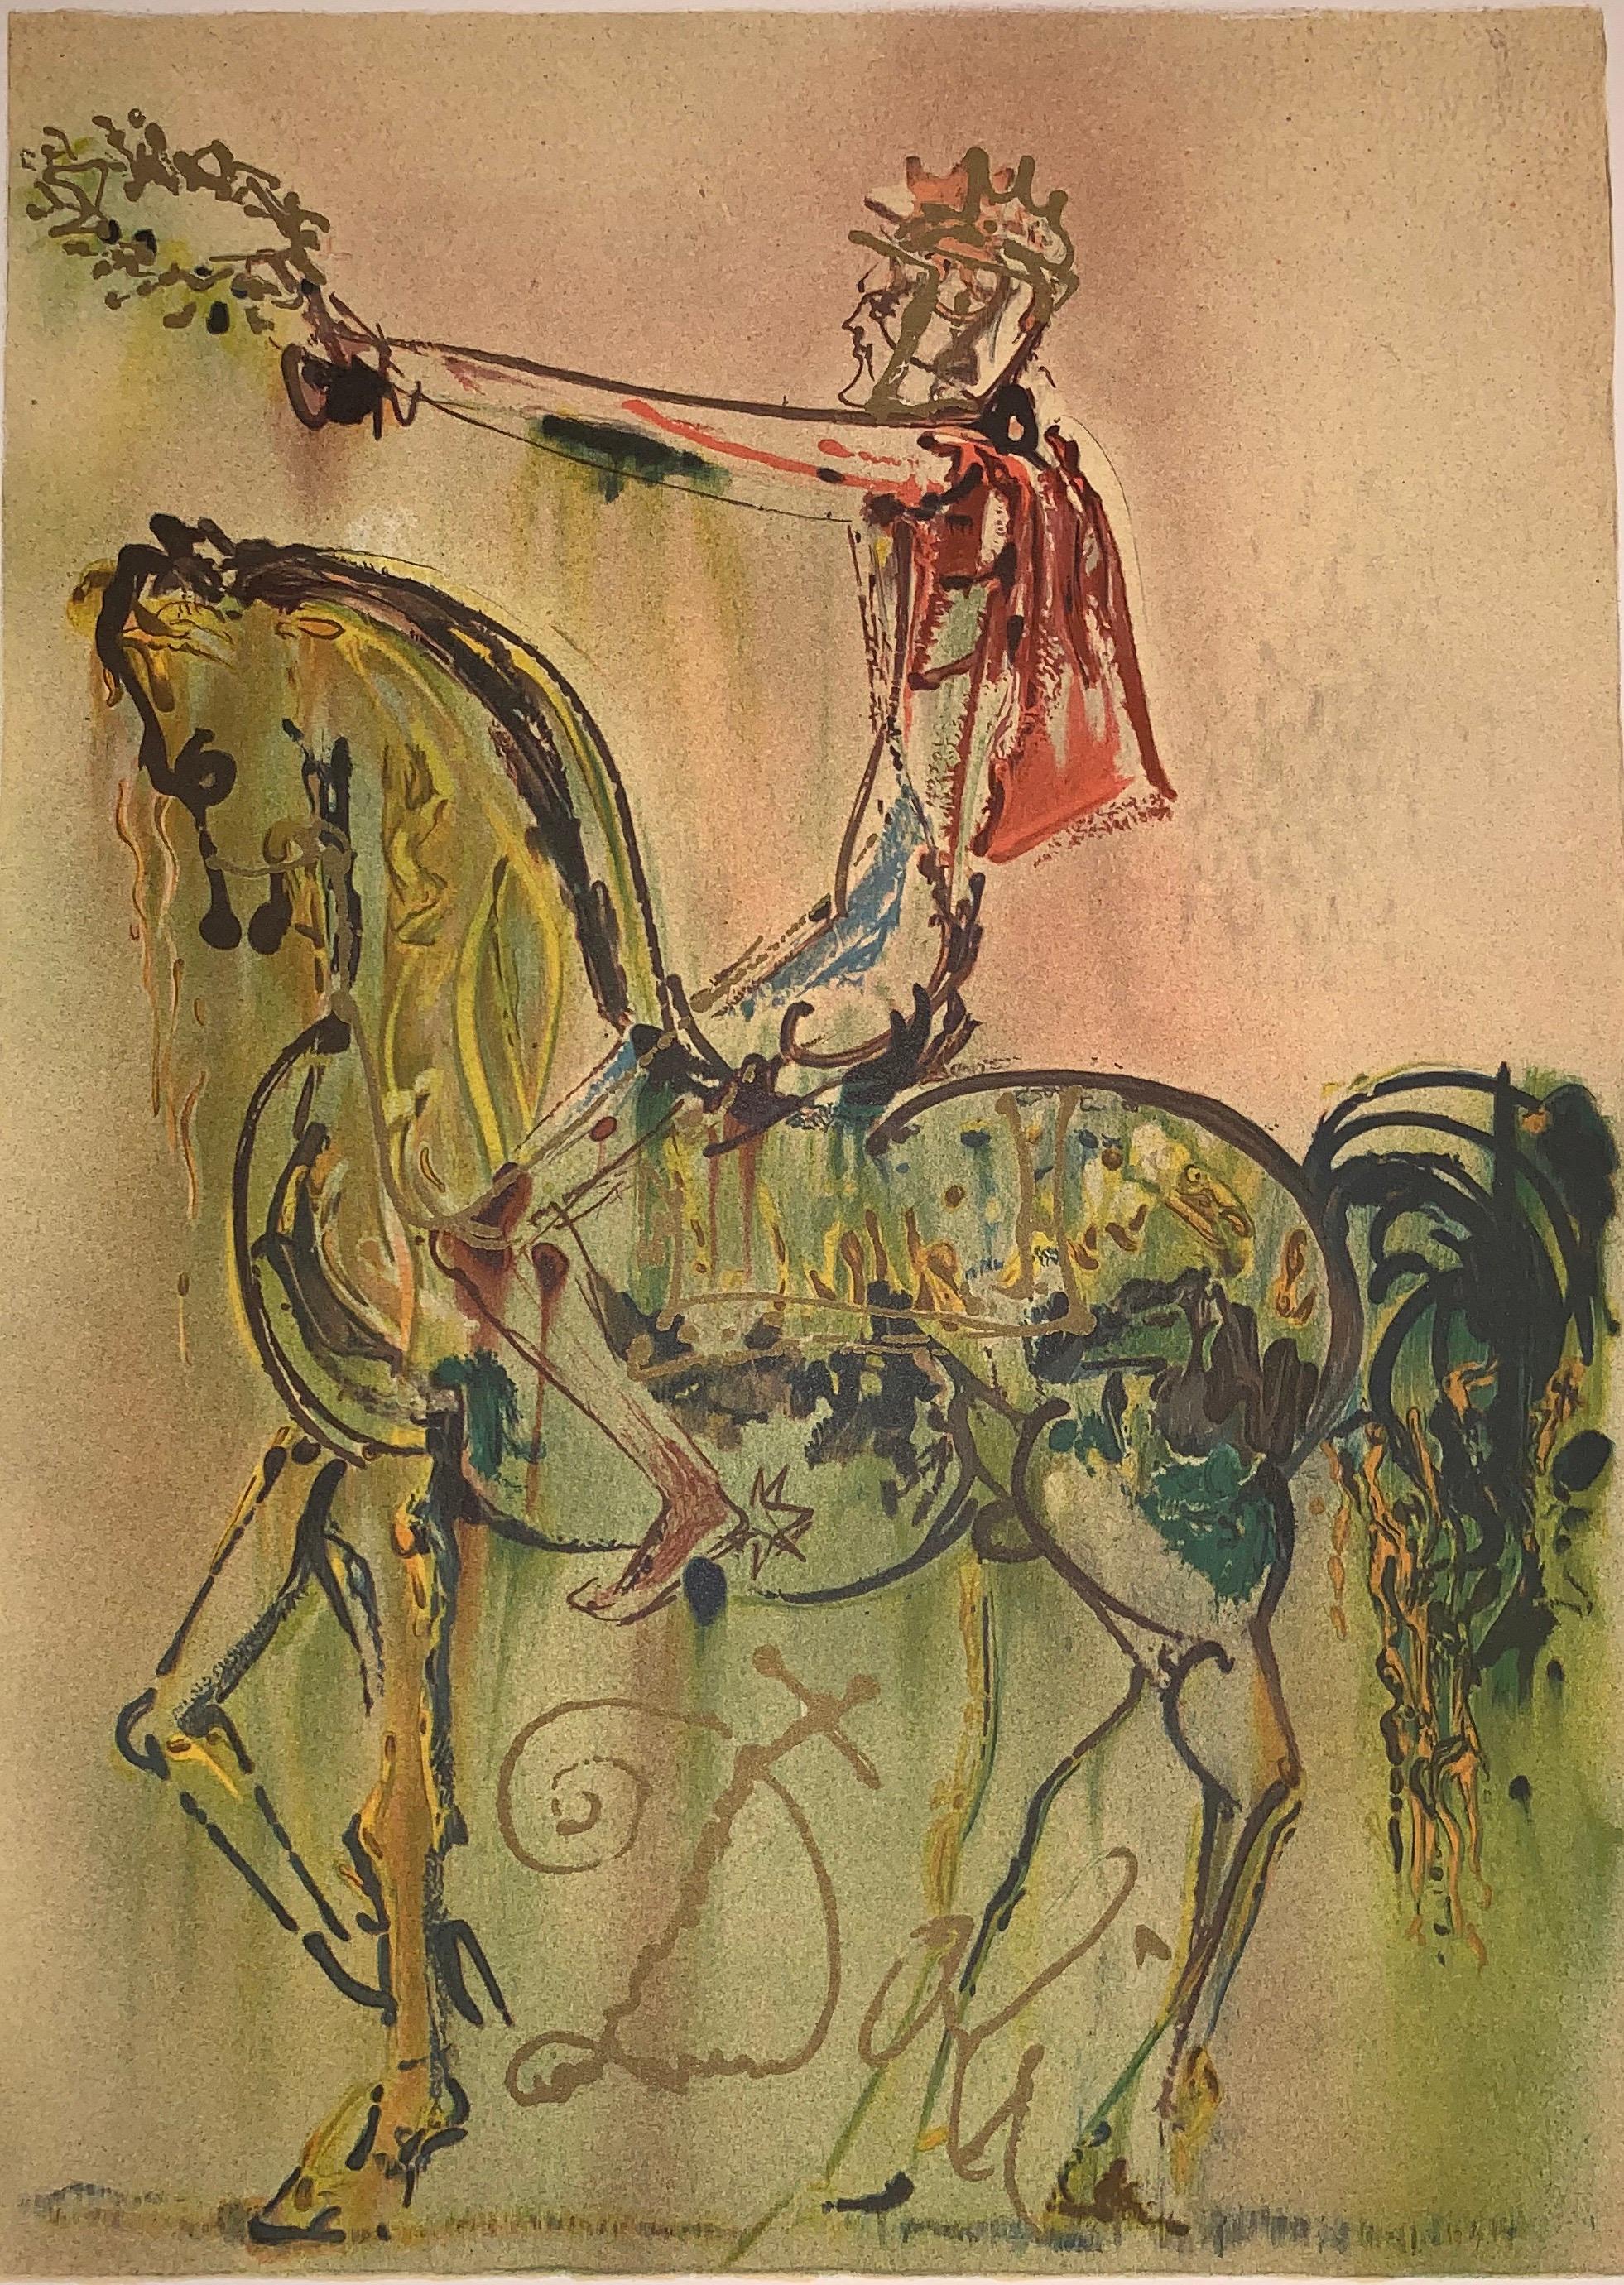 (after) Salvador Dali Figurative Print - The Roman Cavalier The horses of Dali - Lithograph - Surrealist - 1983